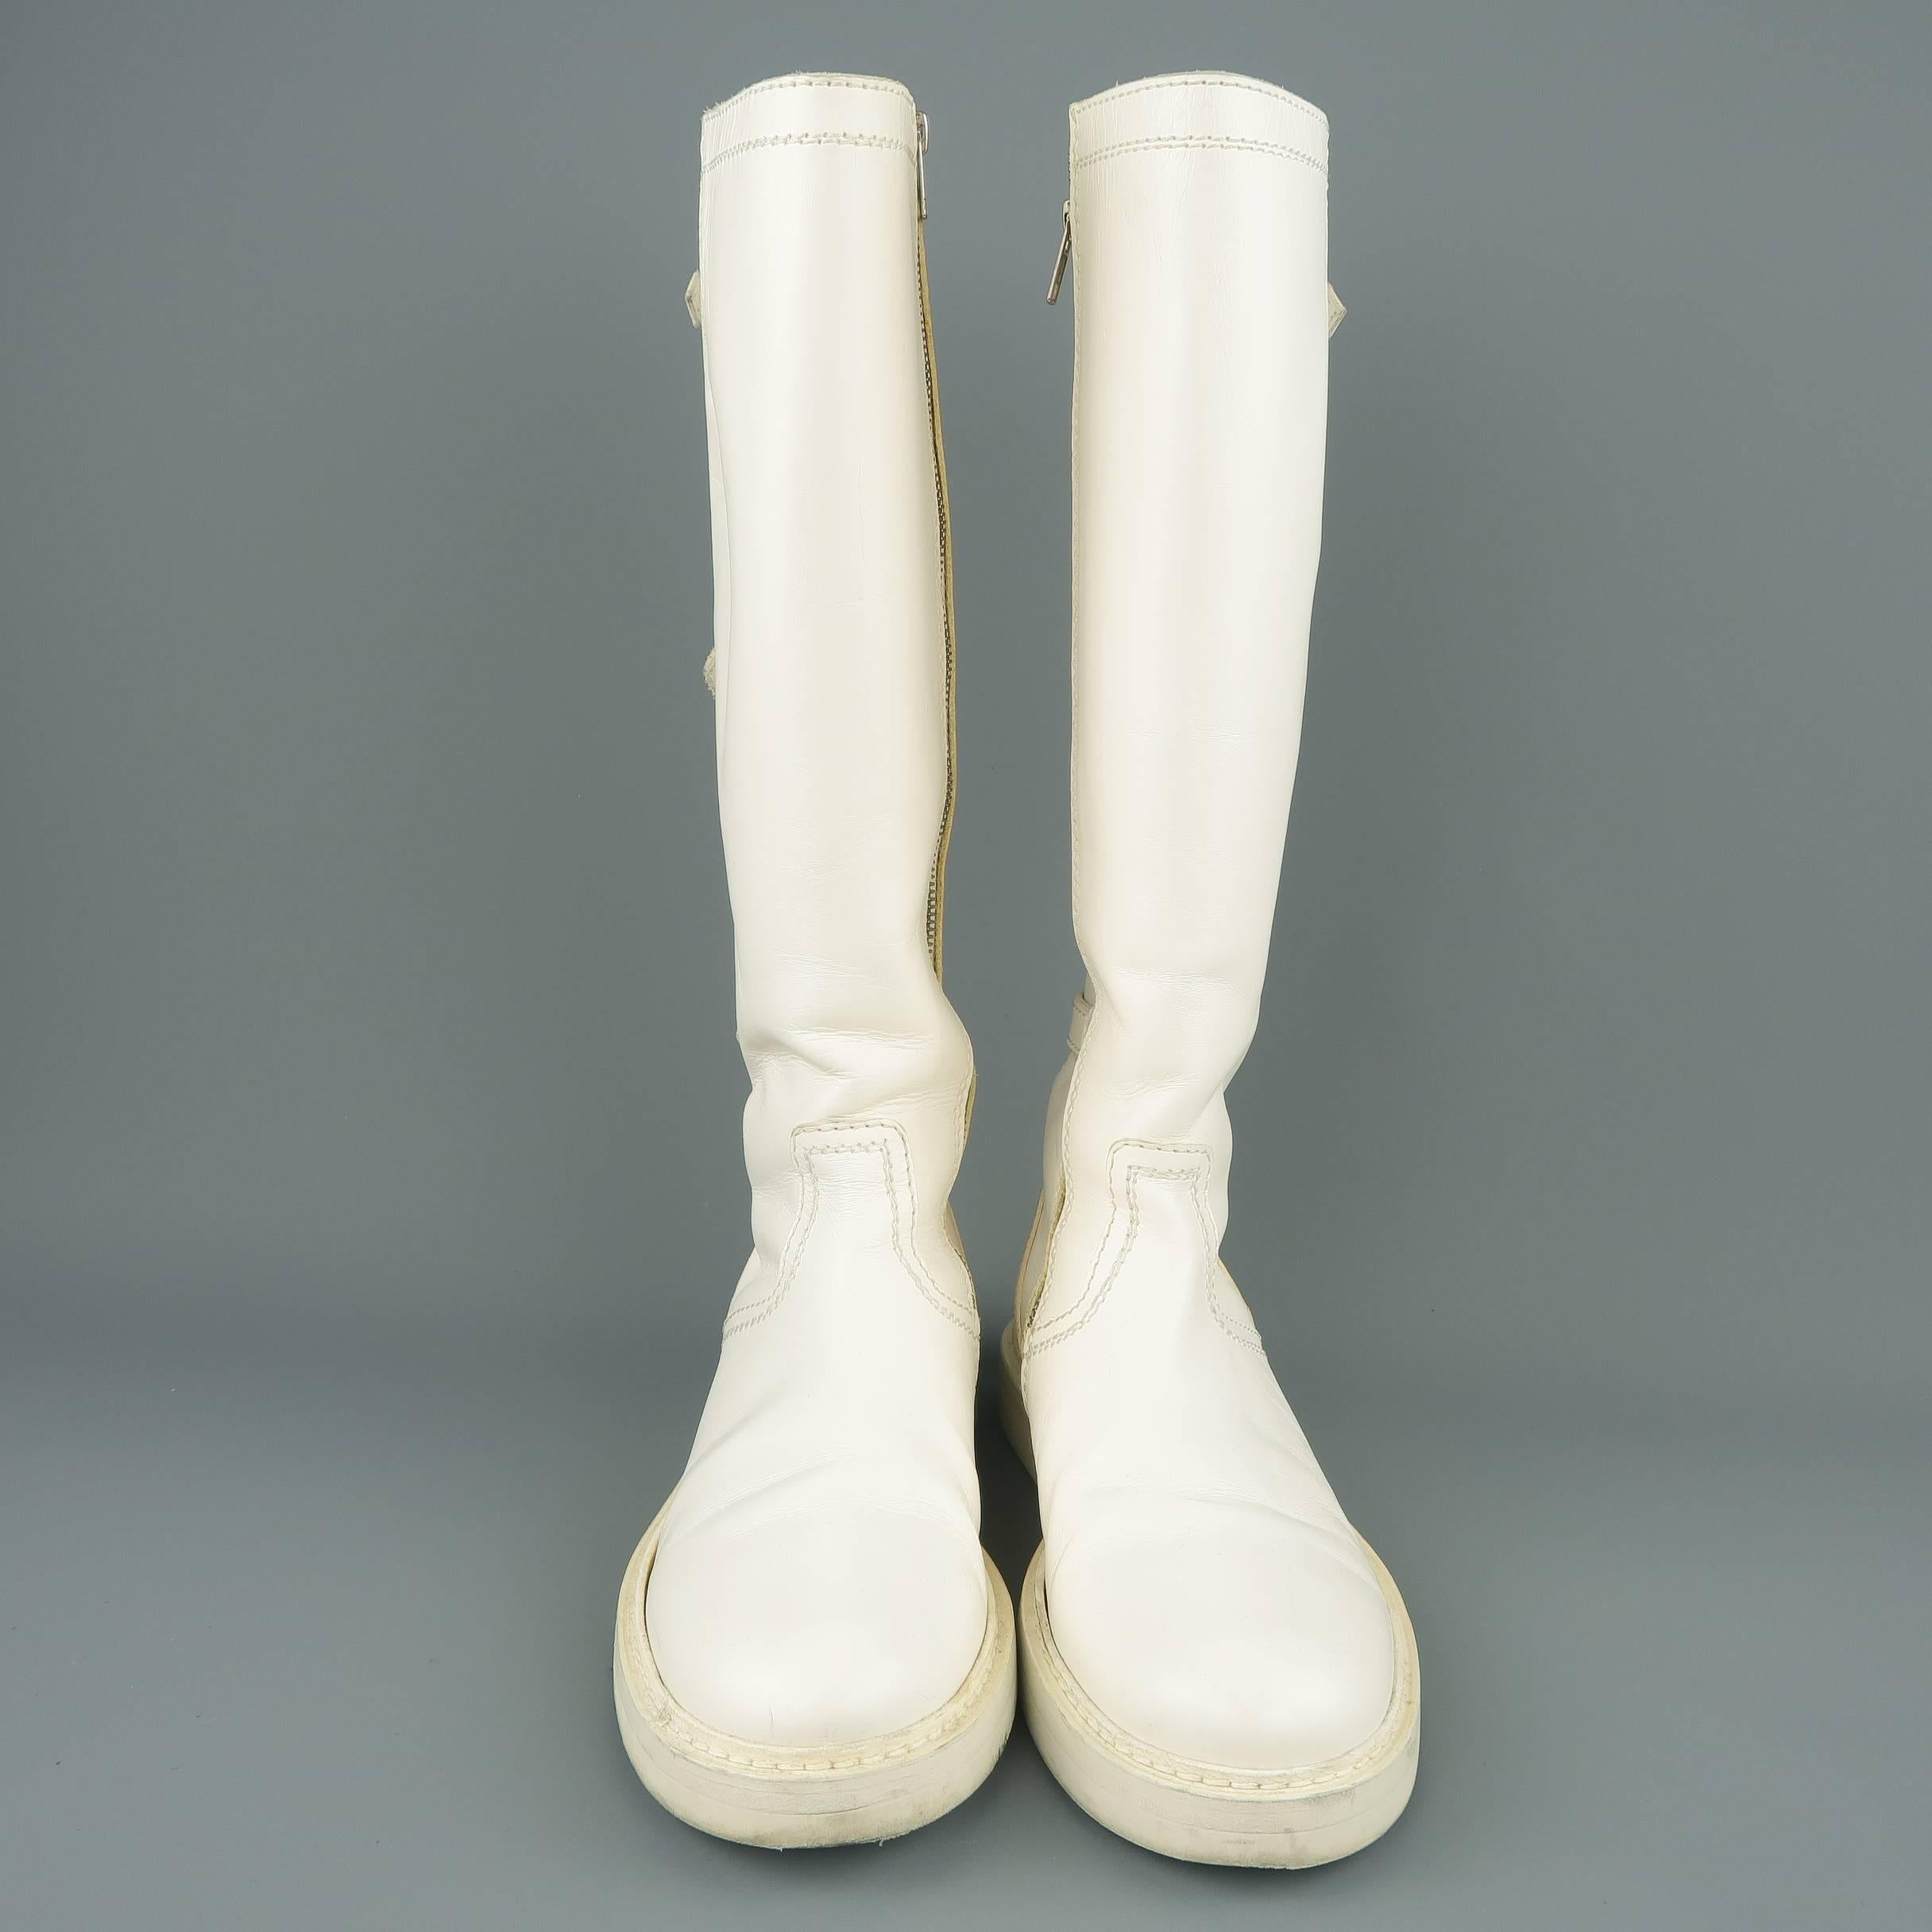 white knee high boots men